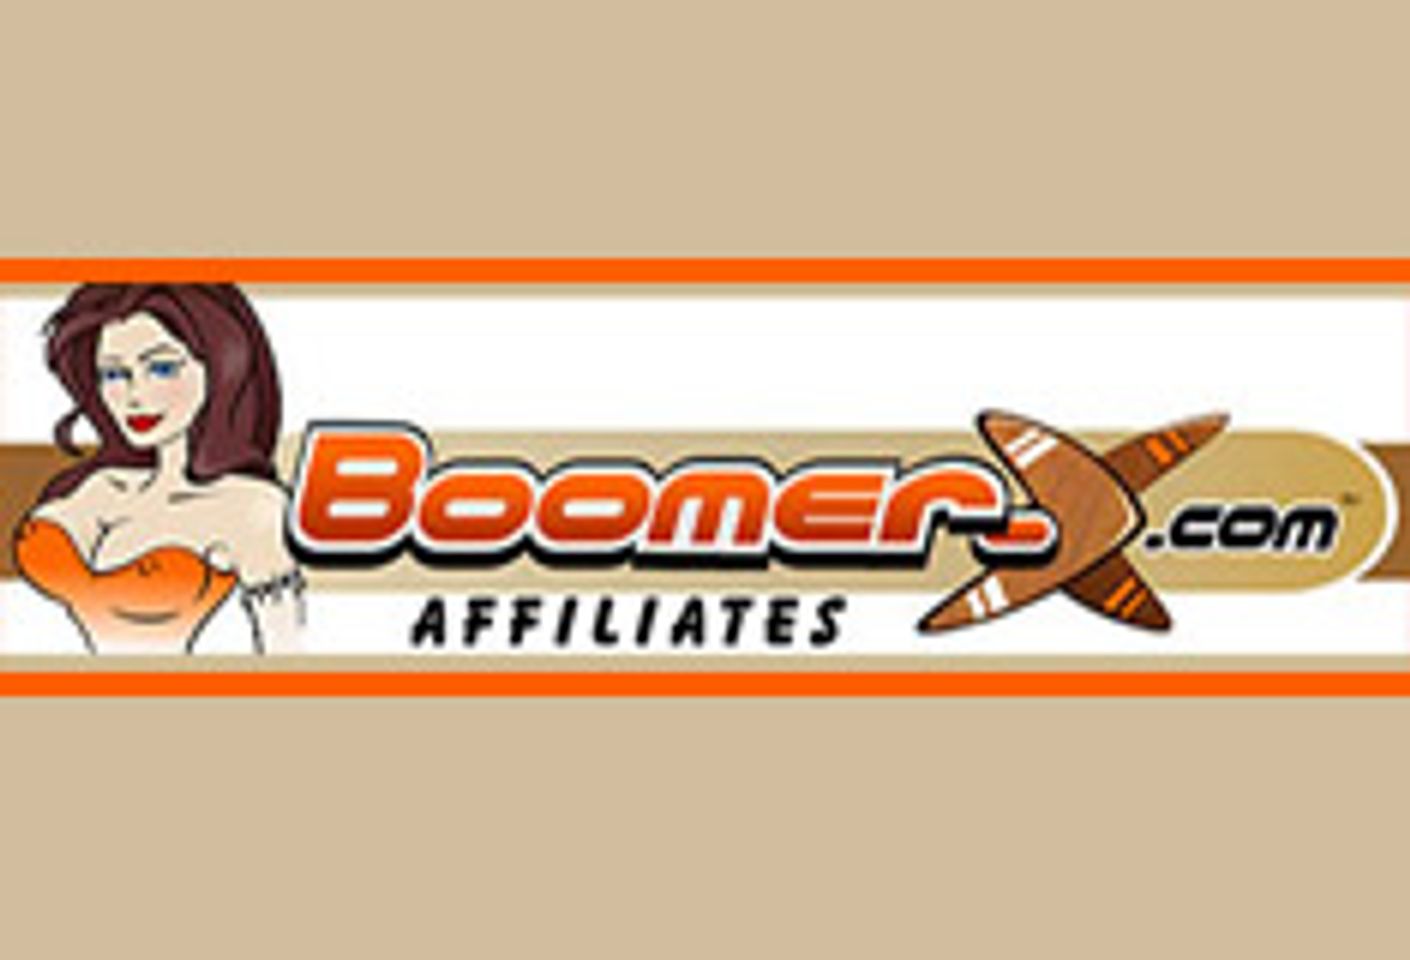 Boomer-X.com Launches Affiliate Program